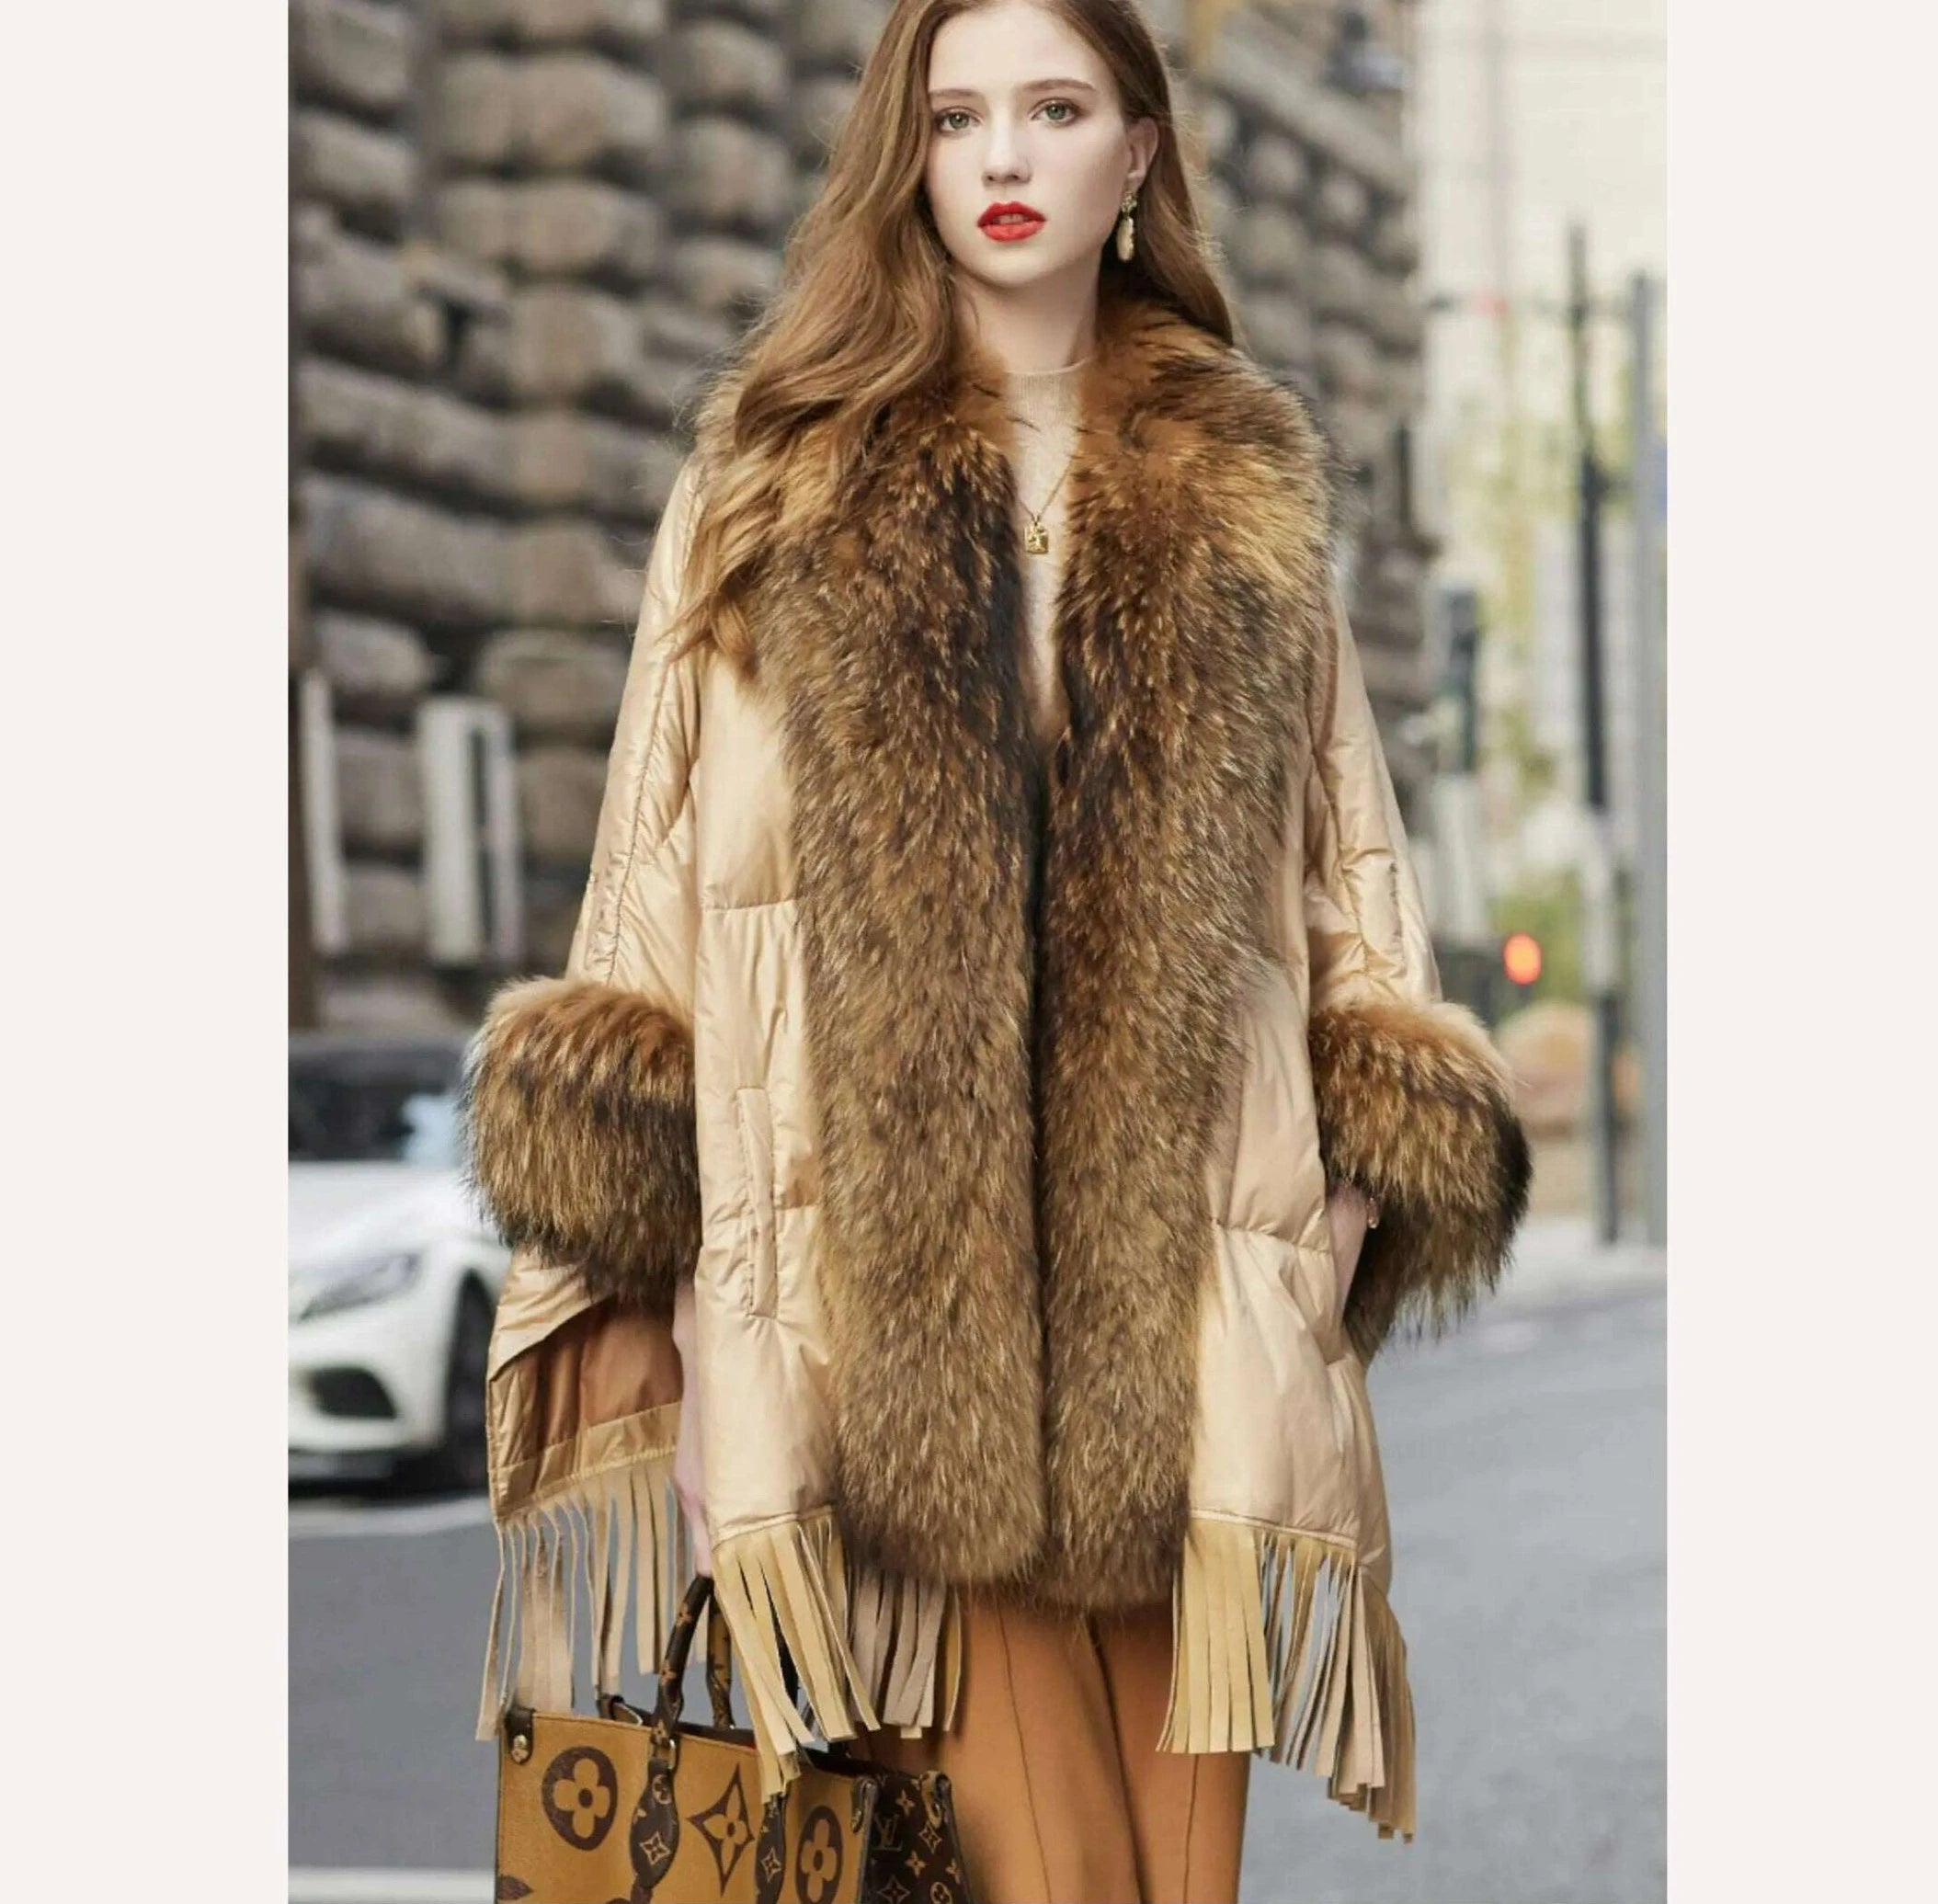 KIMLUD, Hot 2023 European Trend Fashion American Women Winter Jacket Real Raccoon Fur Streetwear Fashion Cloak Goose Down Down Coat, Khaki / One size, KIMLUD Women's Clothes